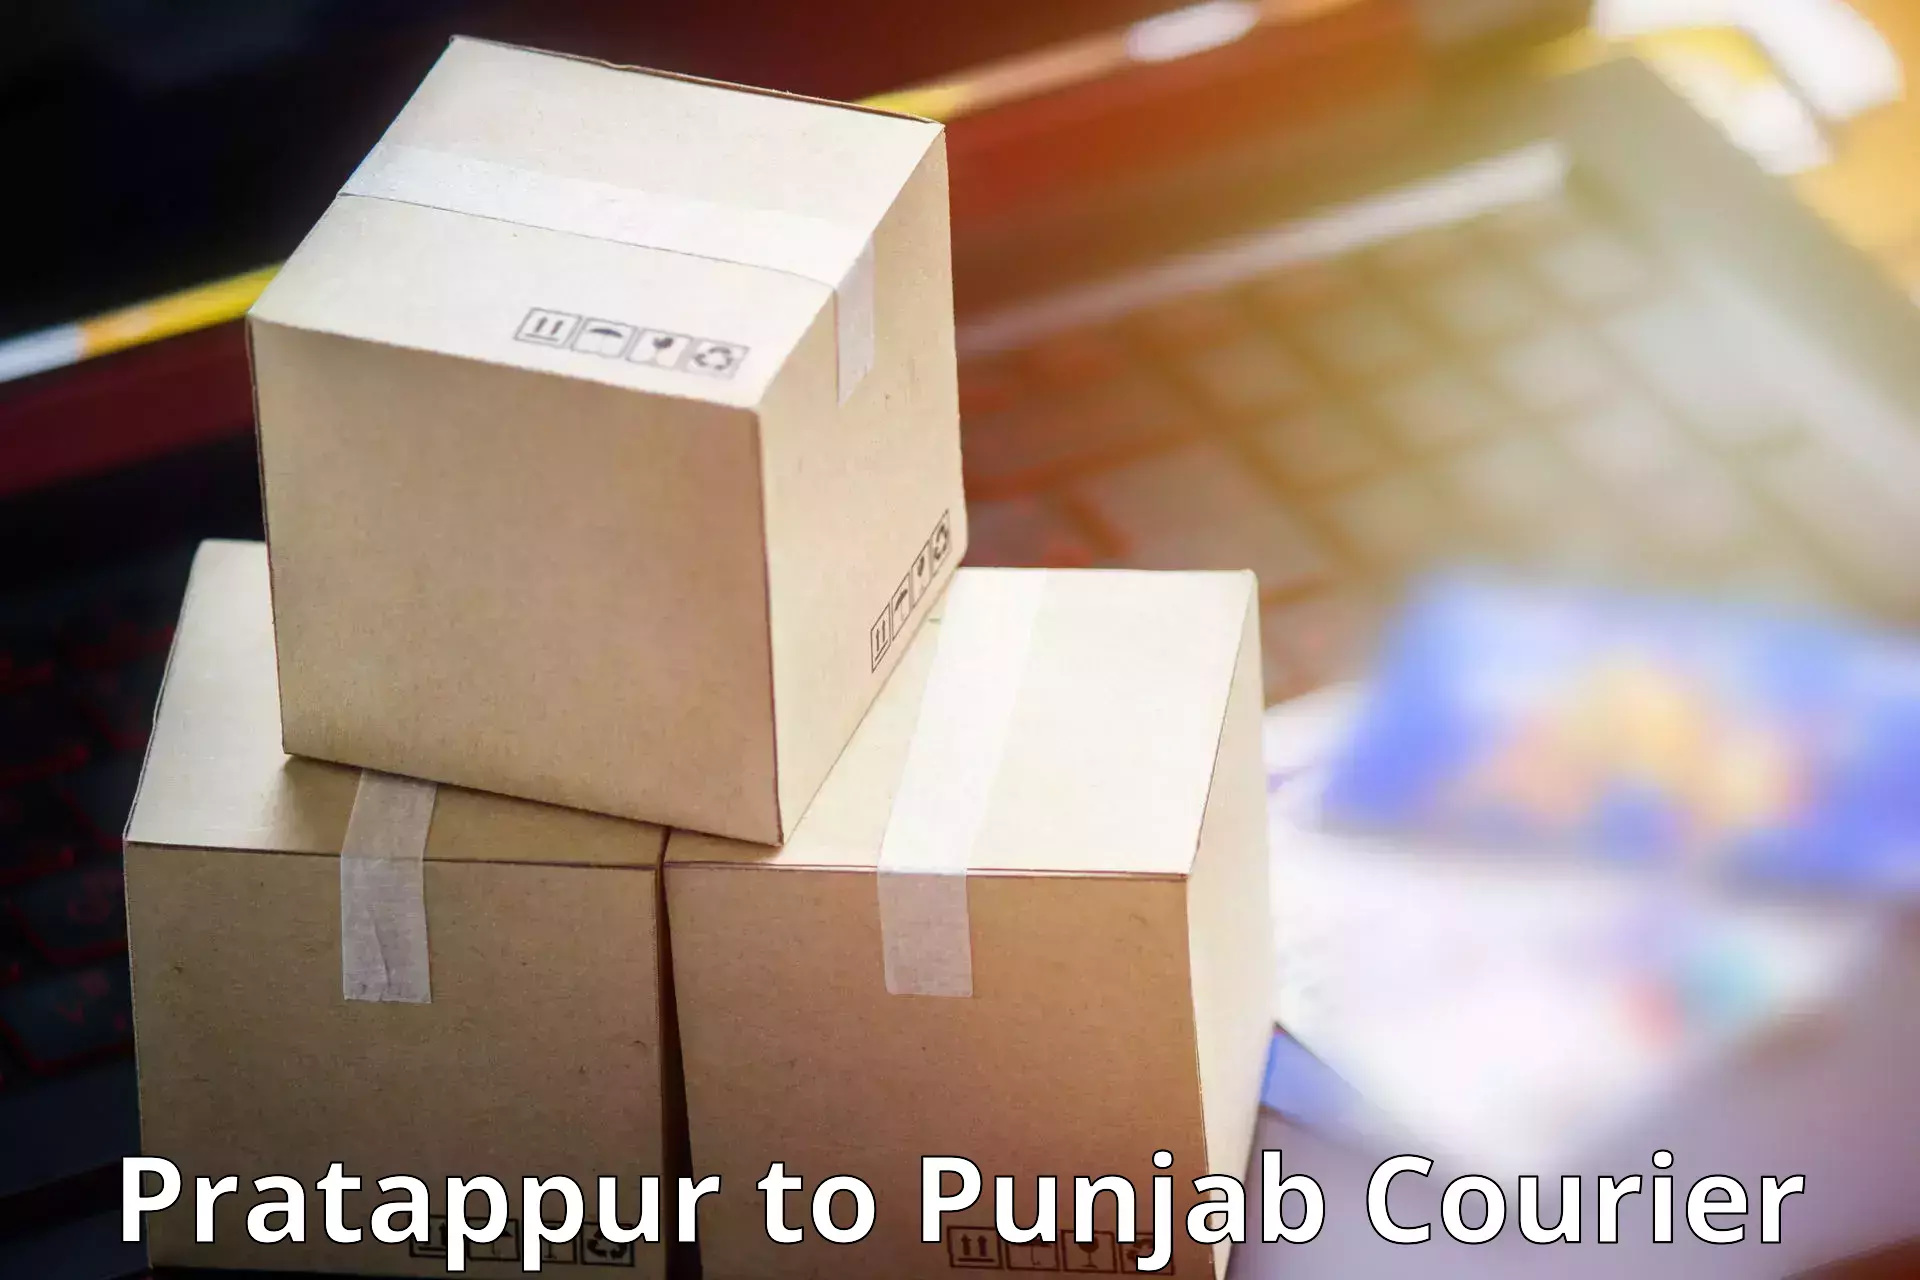 Courier service comparison Pratappur to Punjab Agricultural University Ludhiana